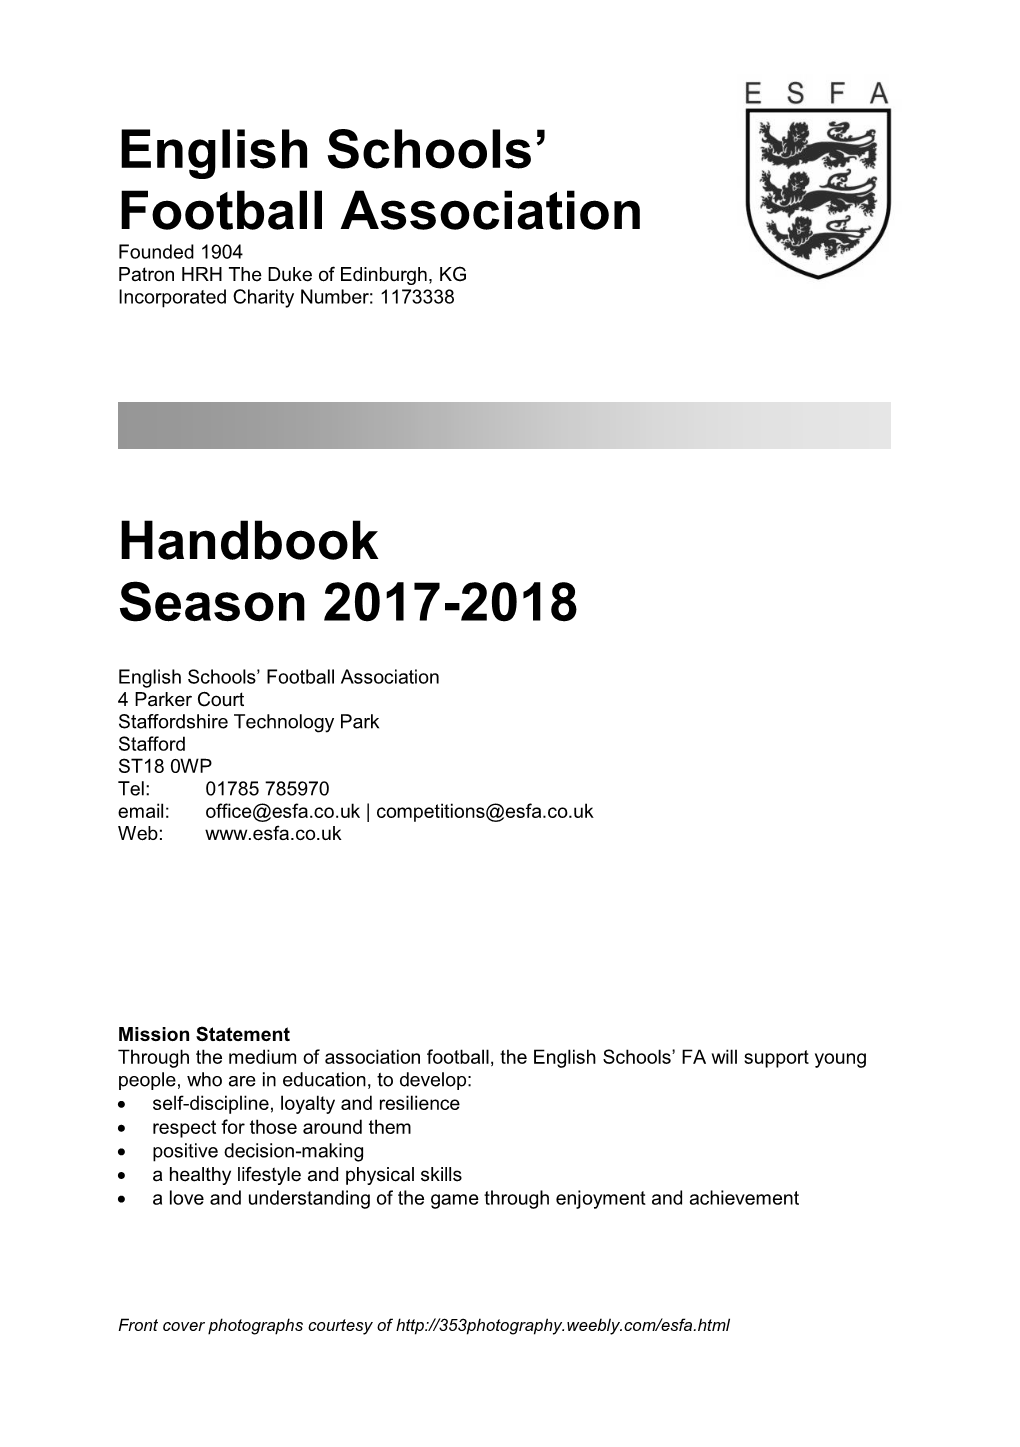 English Schools' Football Association Handbook Season 2017-2018